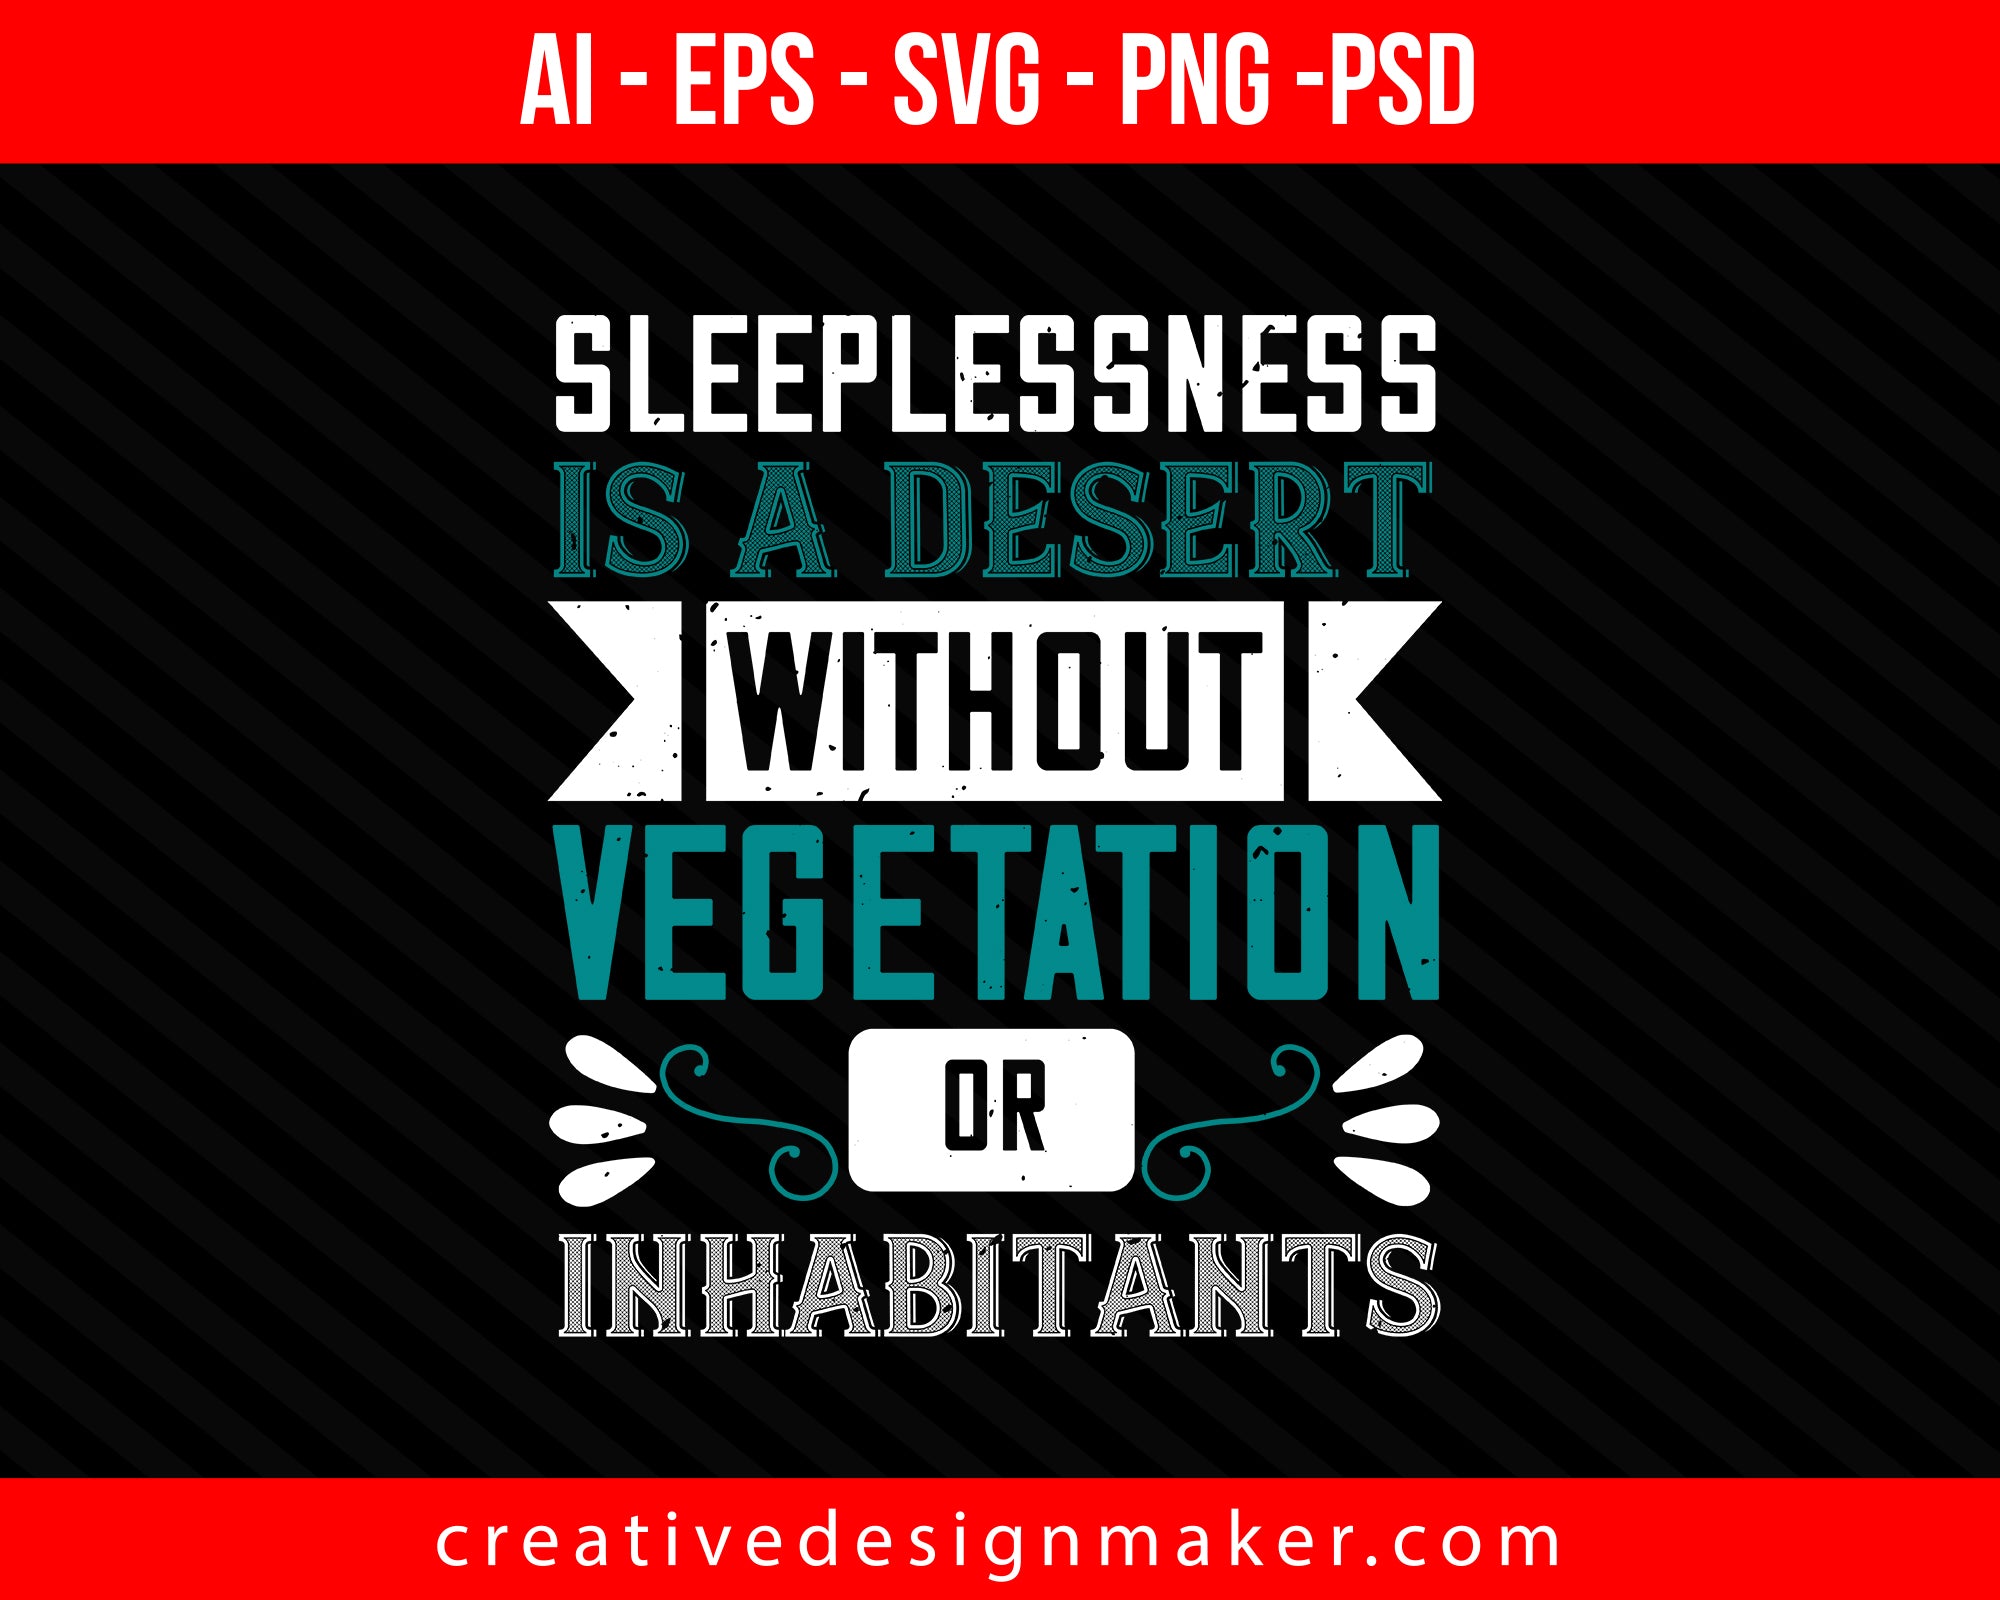 Sleeplessness is a desert without vegetation or inhabitants Print Ready Editable T-Shirt SVG Design!